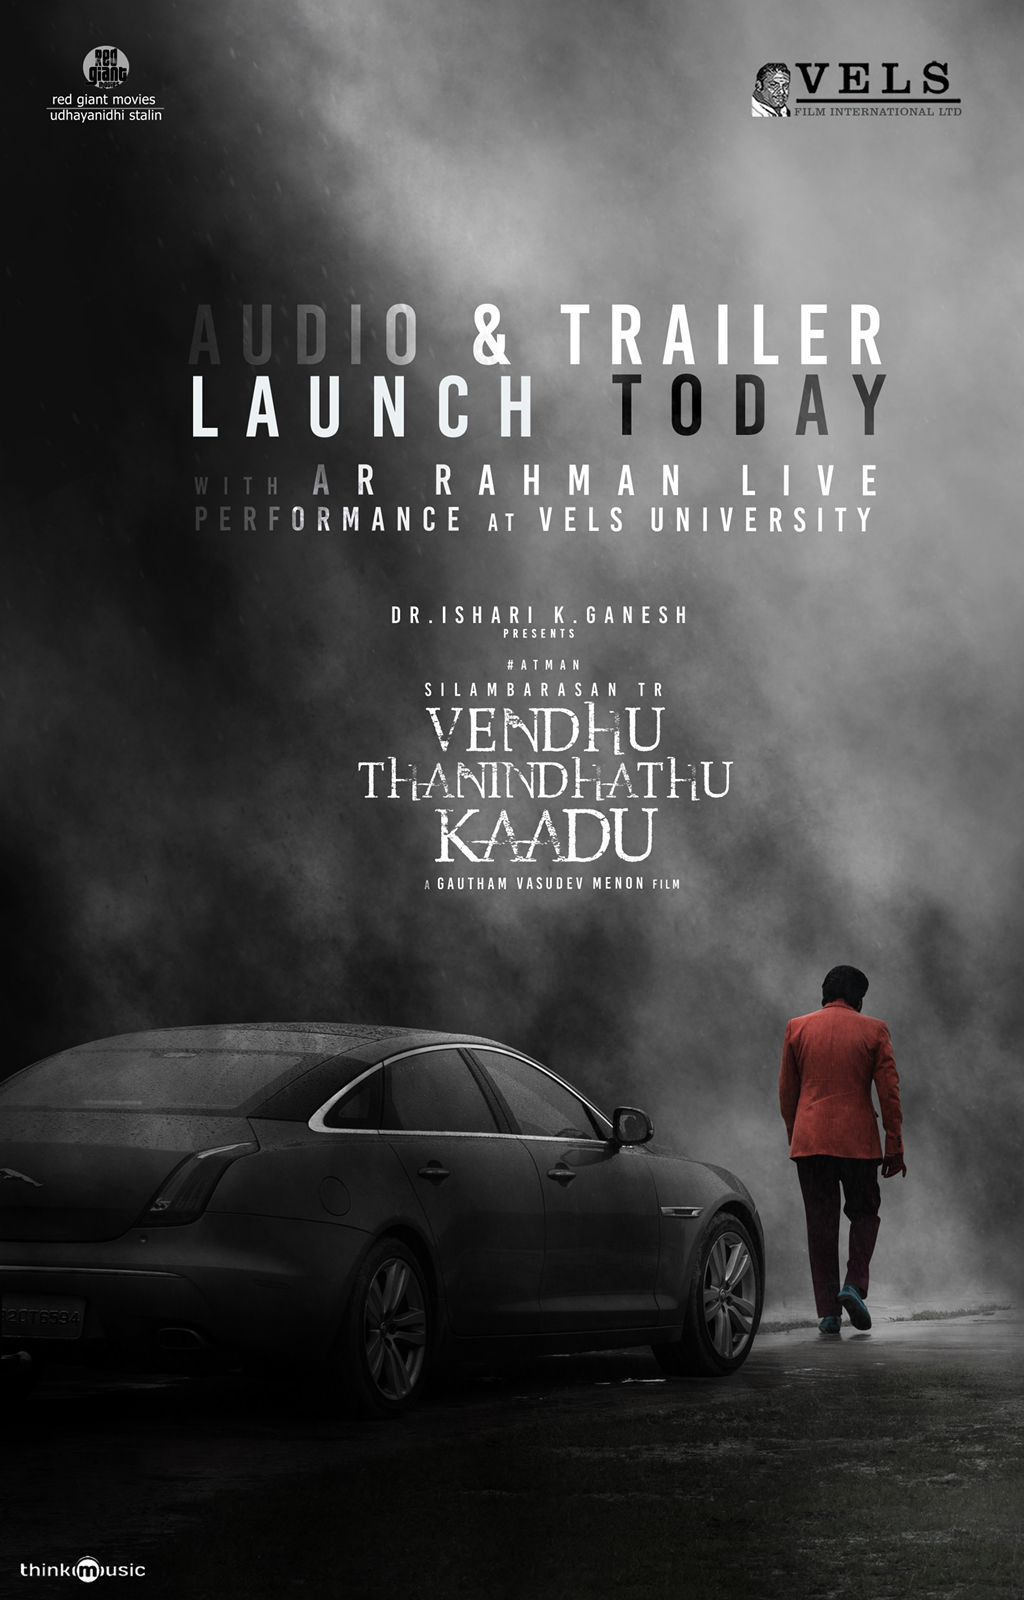 Silambarasan TR Venthu Thaninthathu Kaadu Movie New Poster with Jaguar XJL 2011